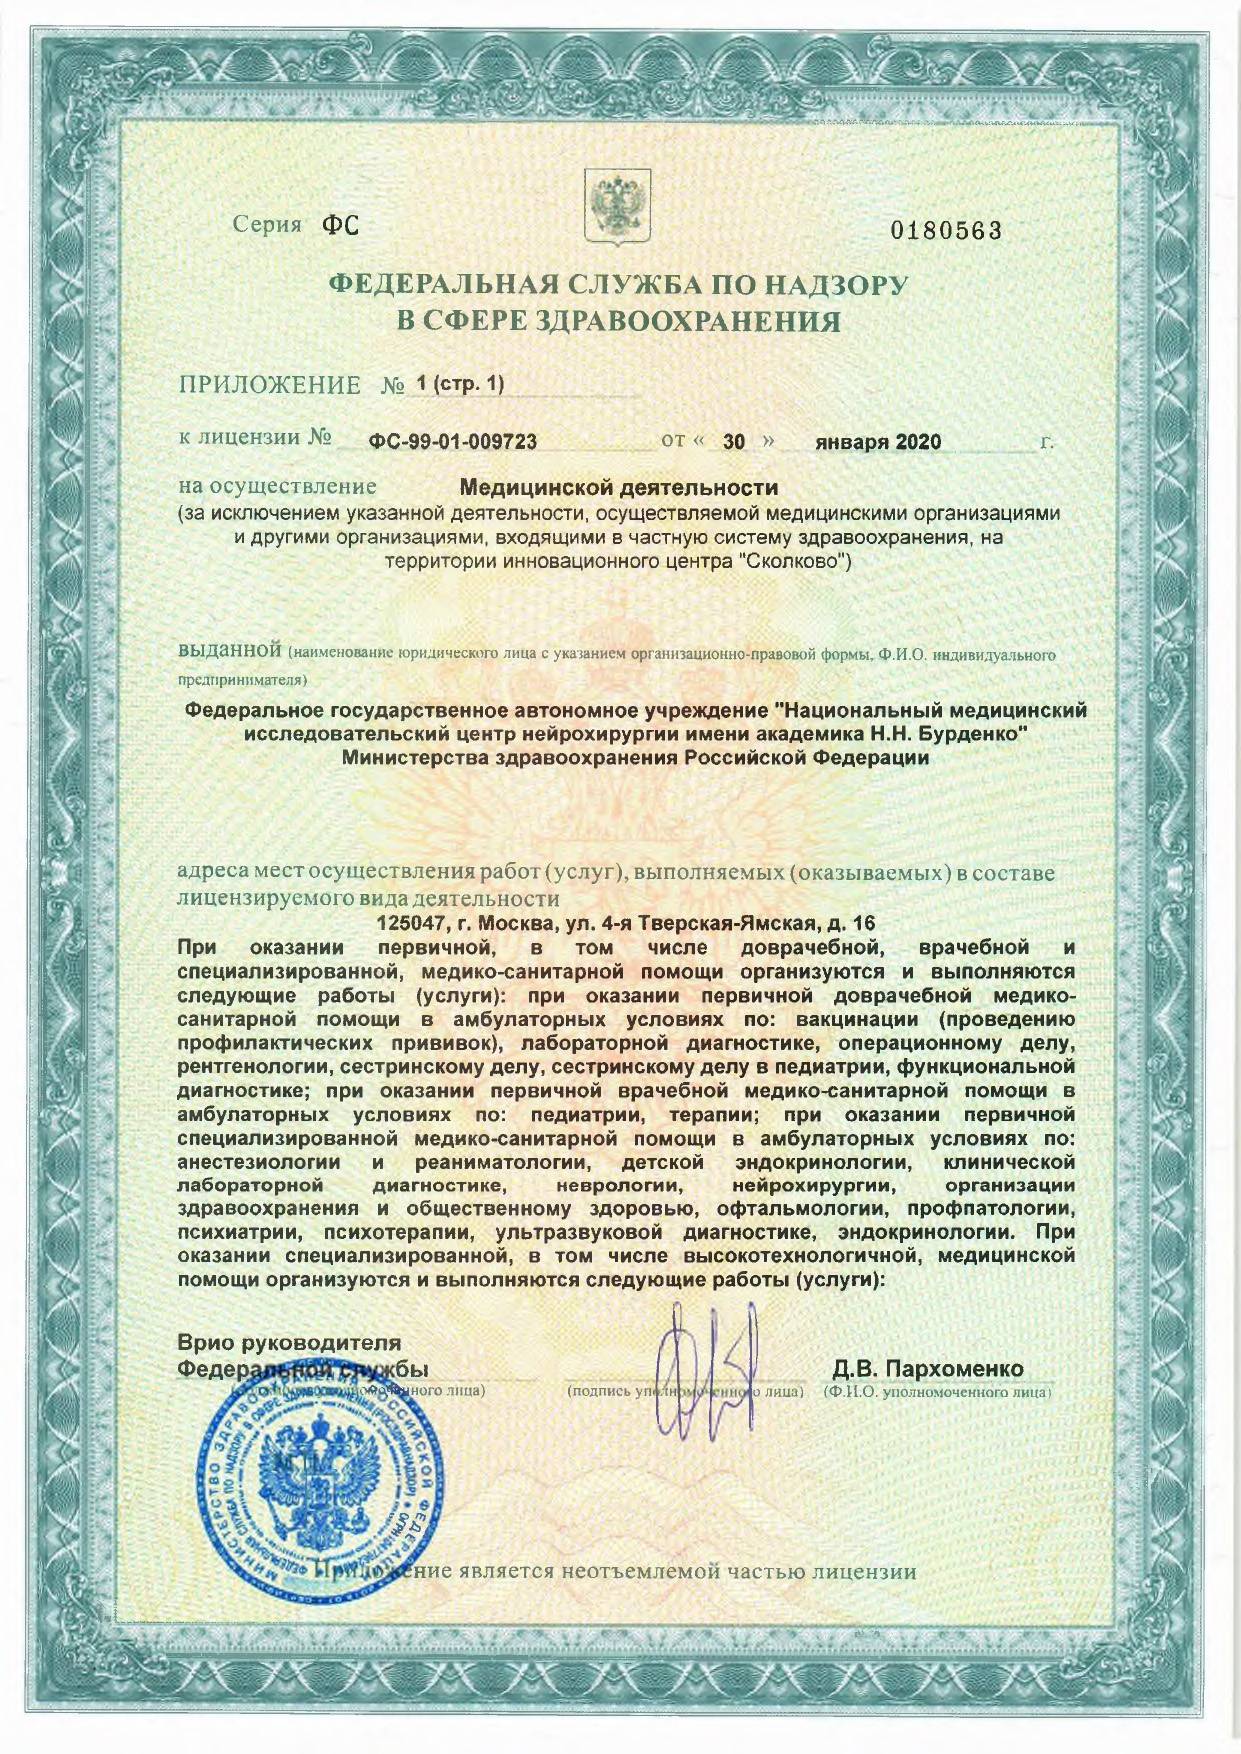 Институт нейрохирургии имени академика Н. Н. Бурденко лицензия №3